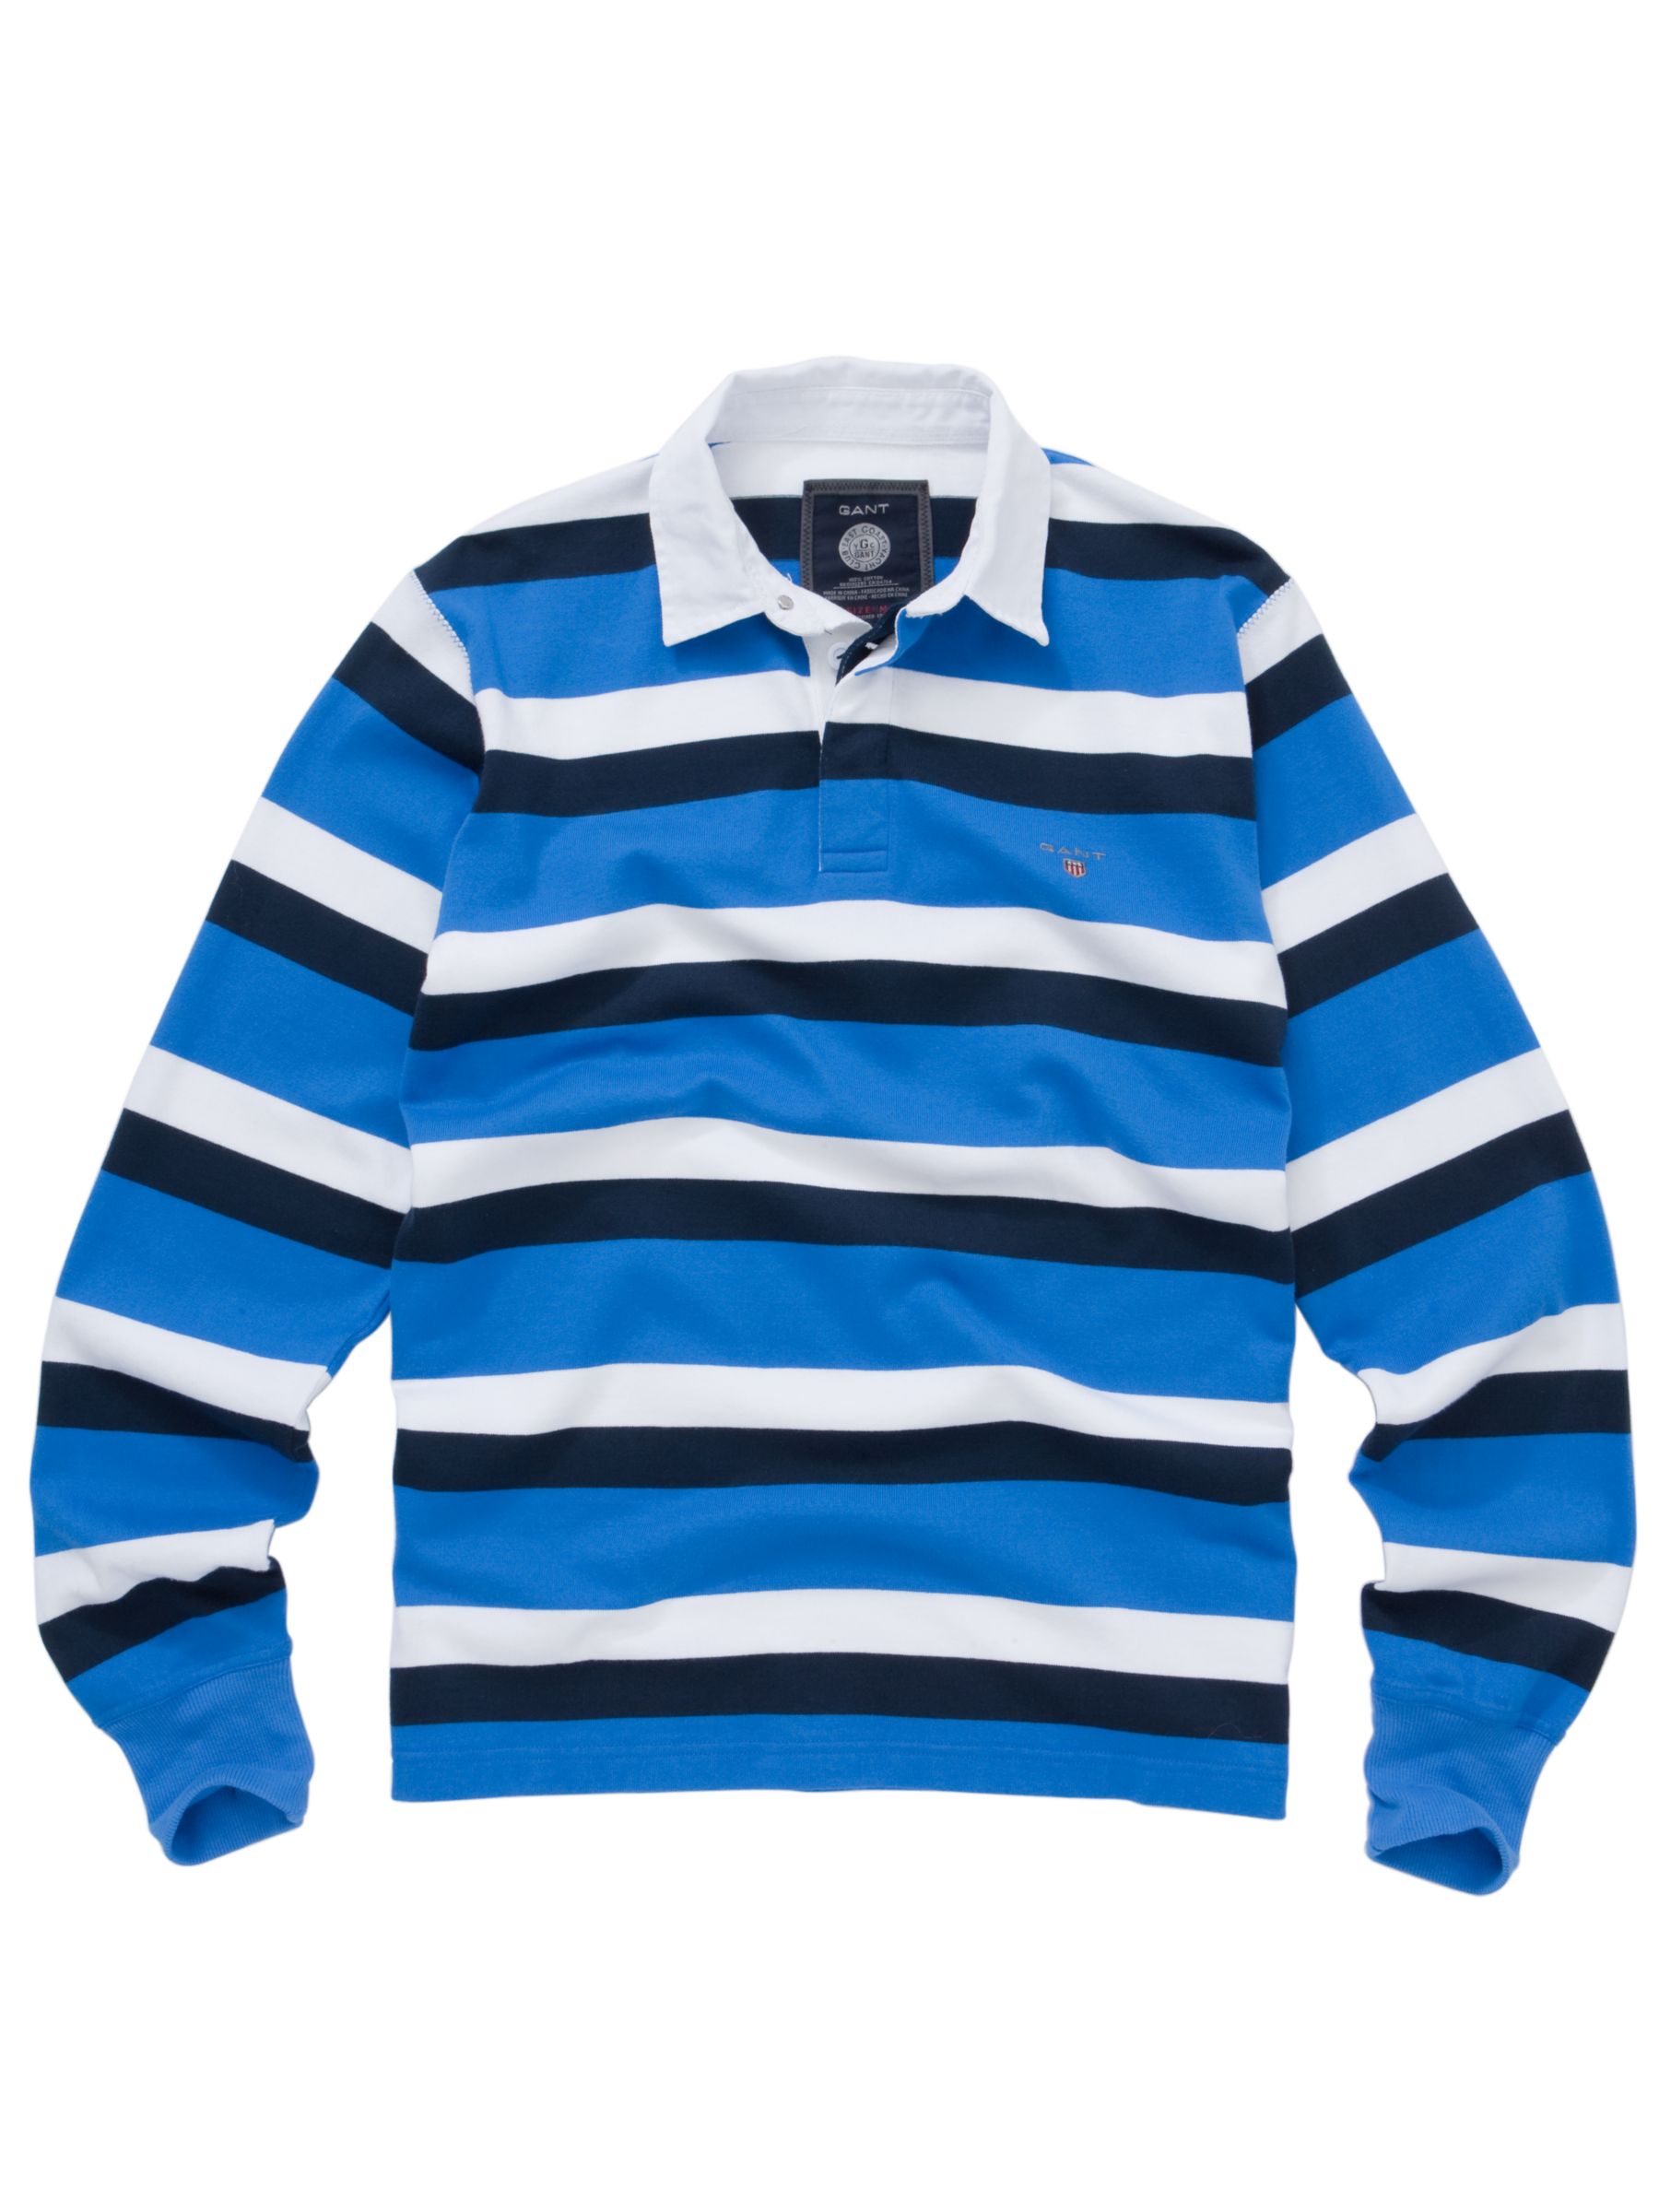 Multi Bar Stripe Rugby Shirt, Iris Blue